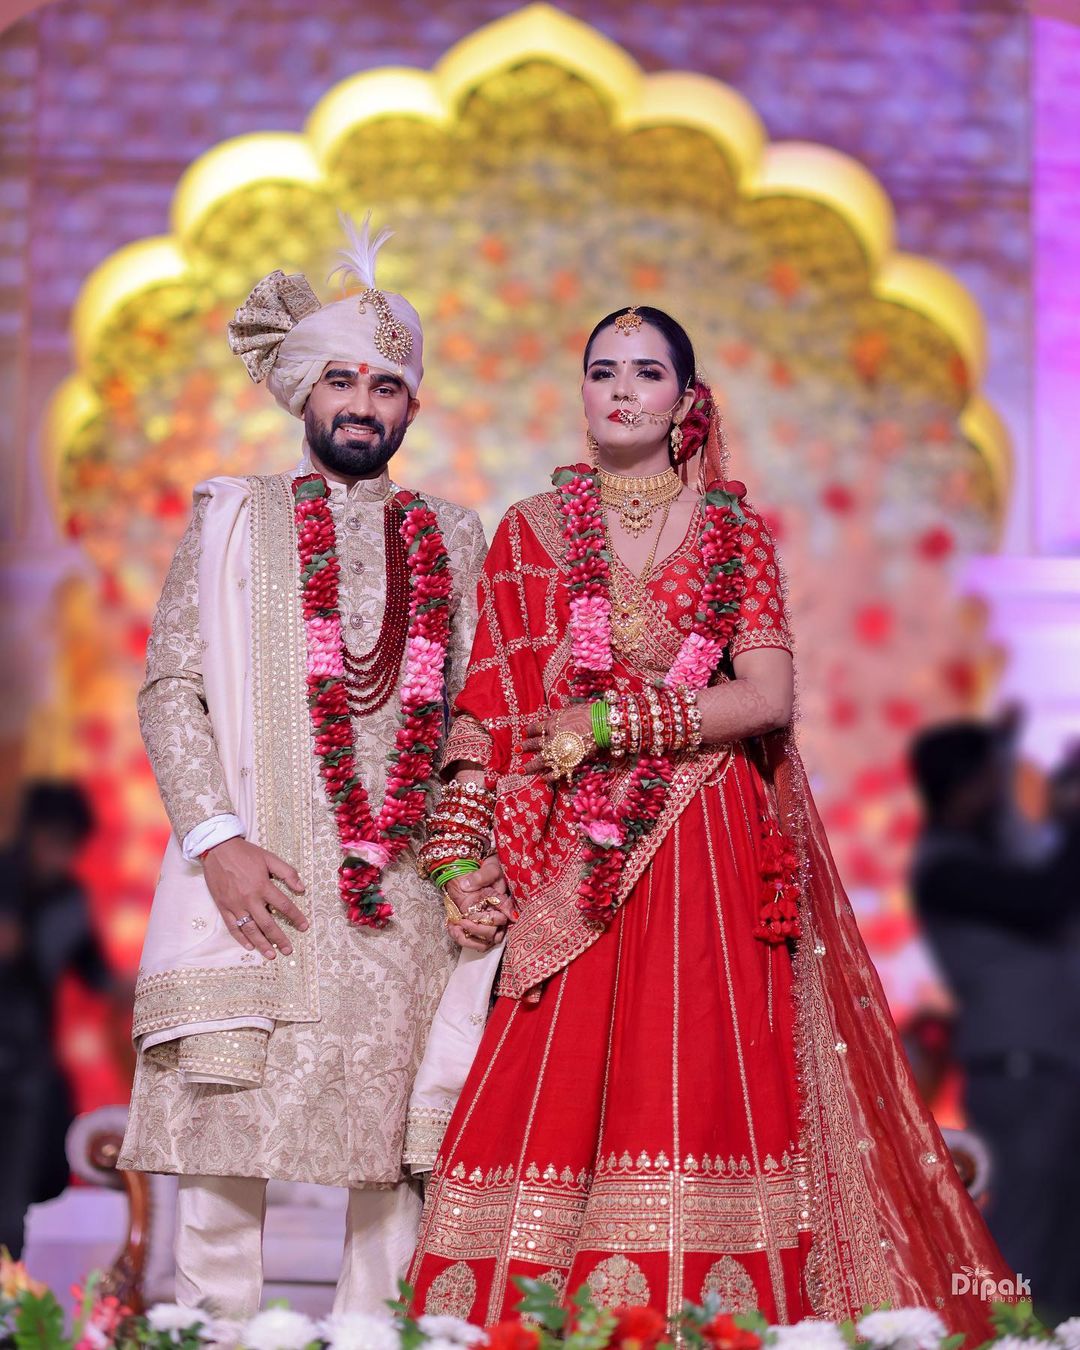 Cricket Rahul Tewatia Get Married To Fiancee Ridhi Pannu Un Royal Event See  Inside Wedding Album Bride In Red Attire And Gold Jewellery | Wedding  Album: मशहूर क्रिकेटर ने गर्लफ्रेंड से रचा